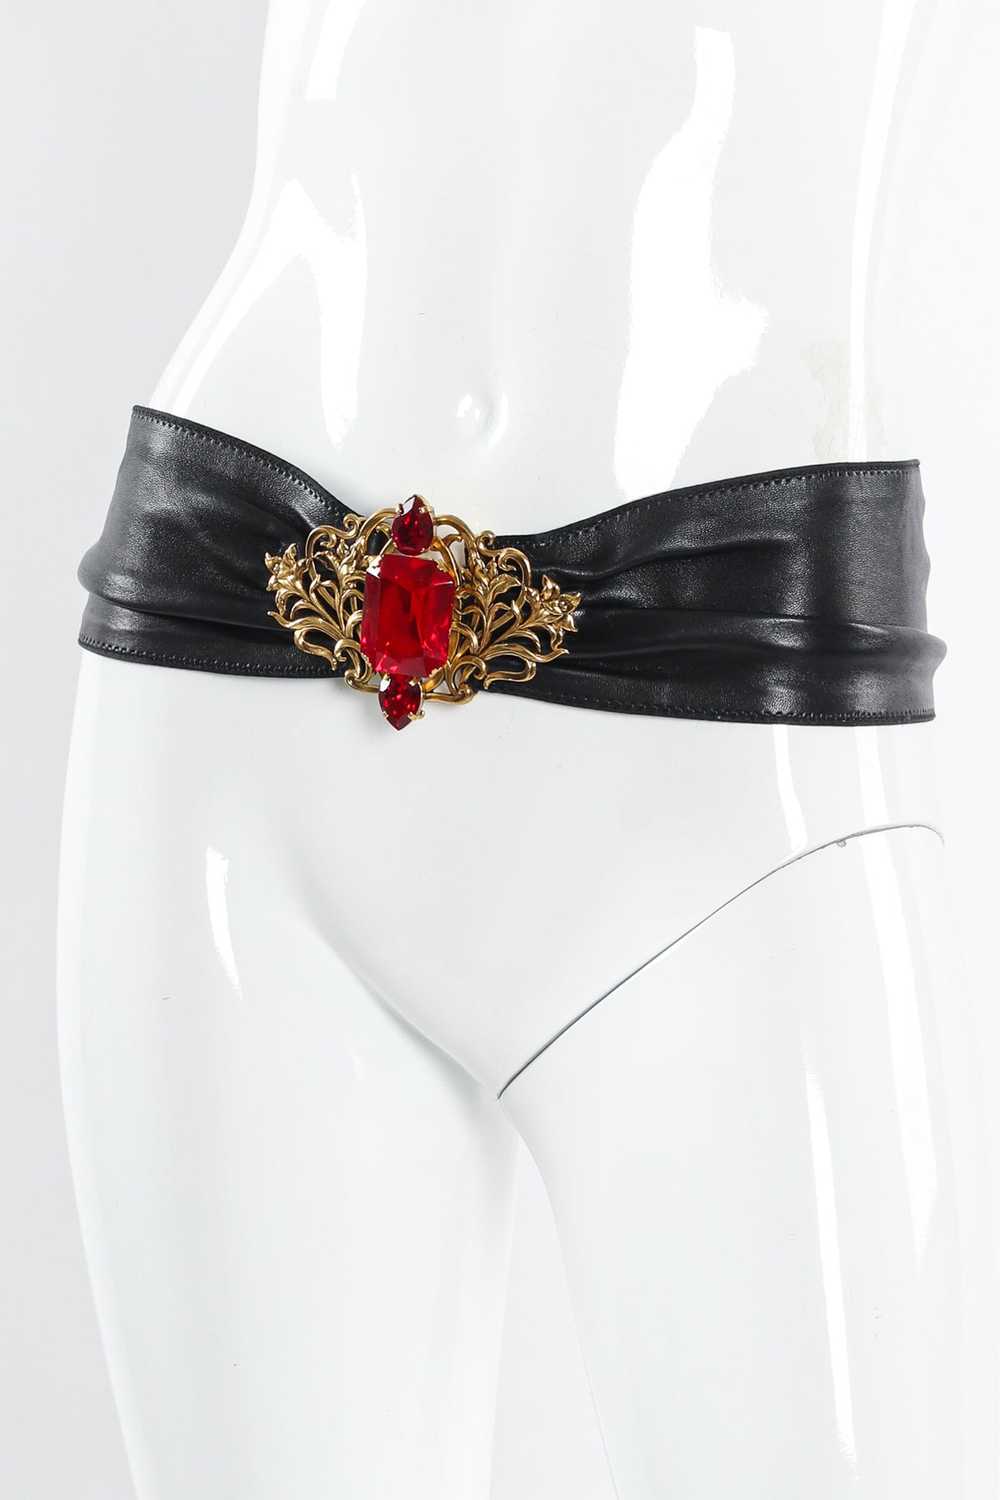 Filigree Ruby Crystal Leather Sash Belt - image 3